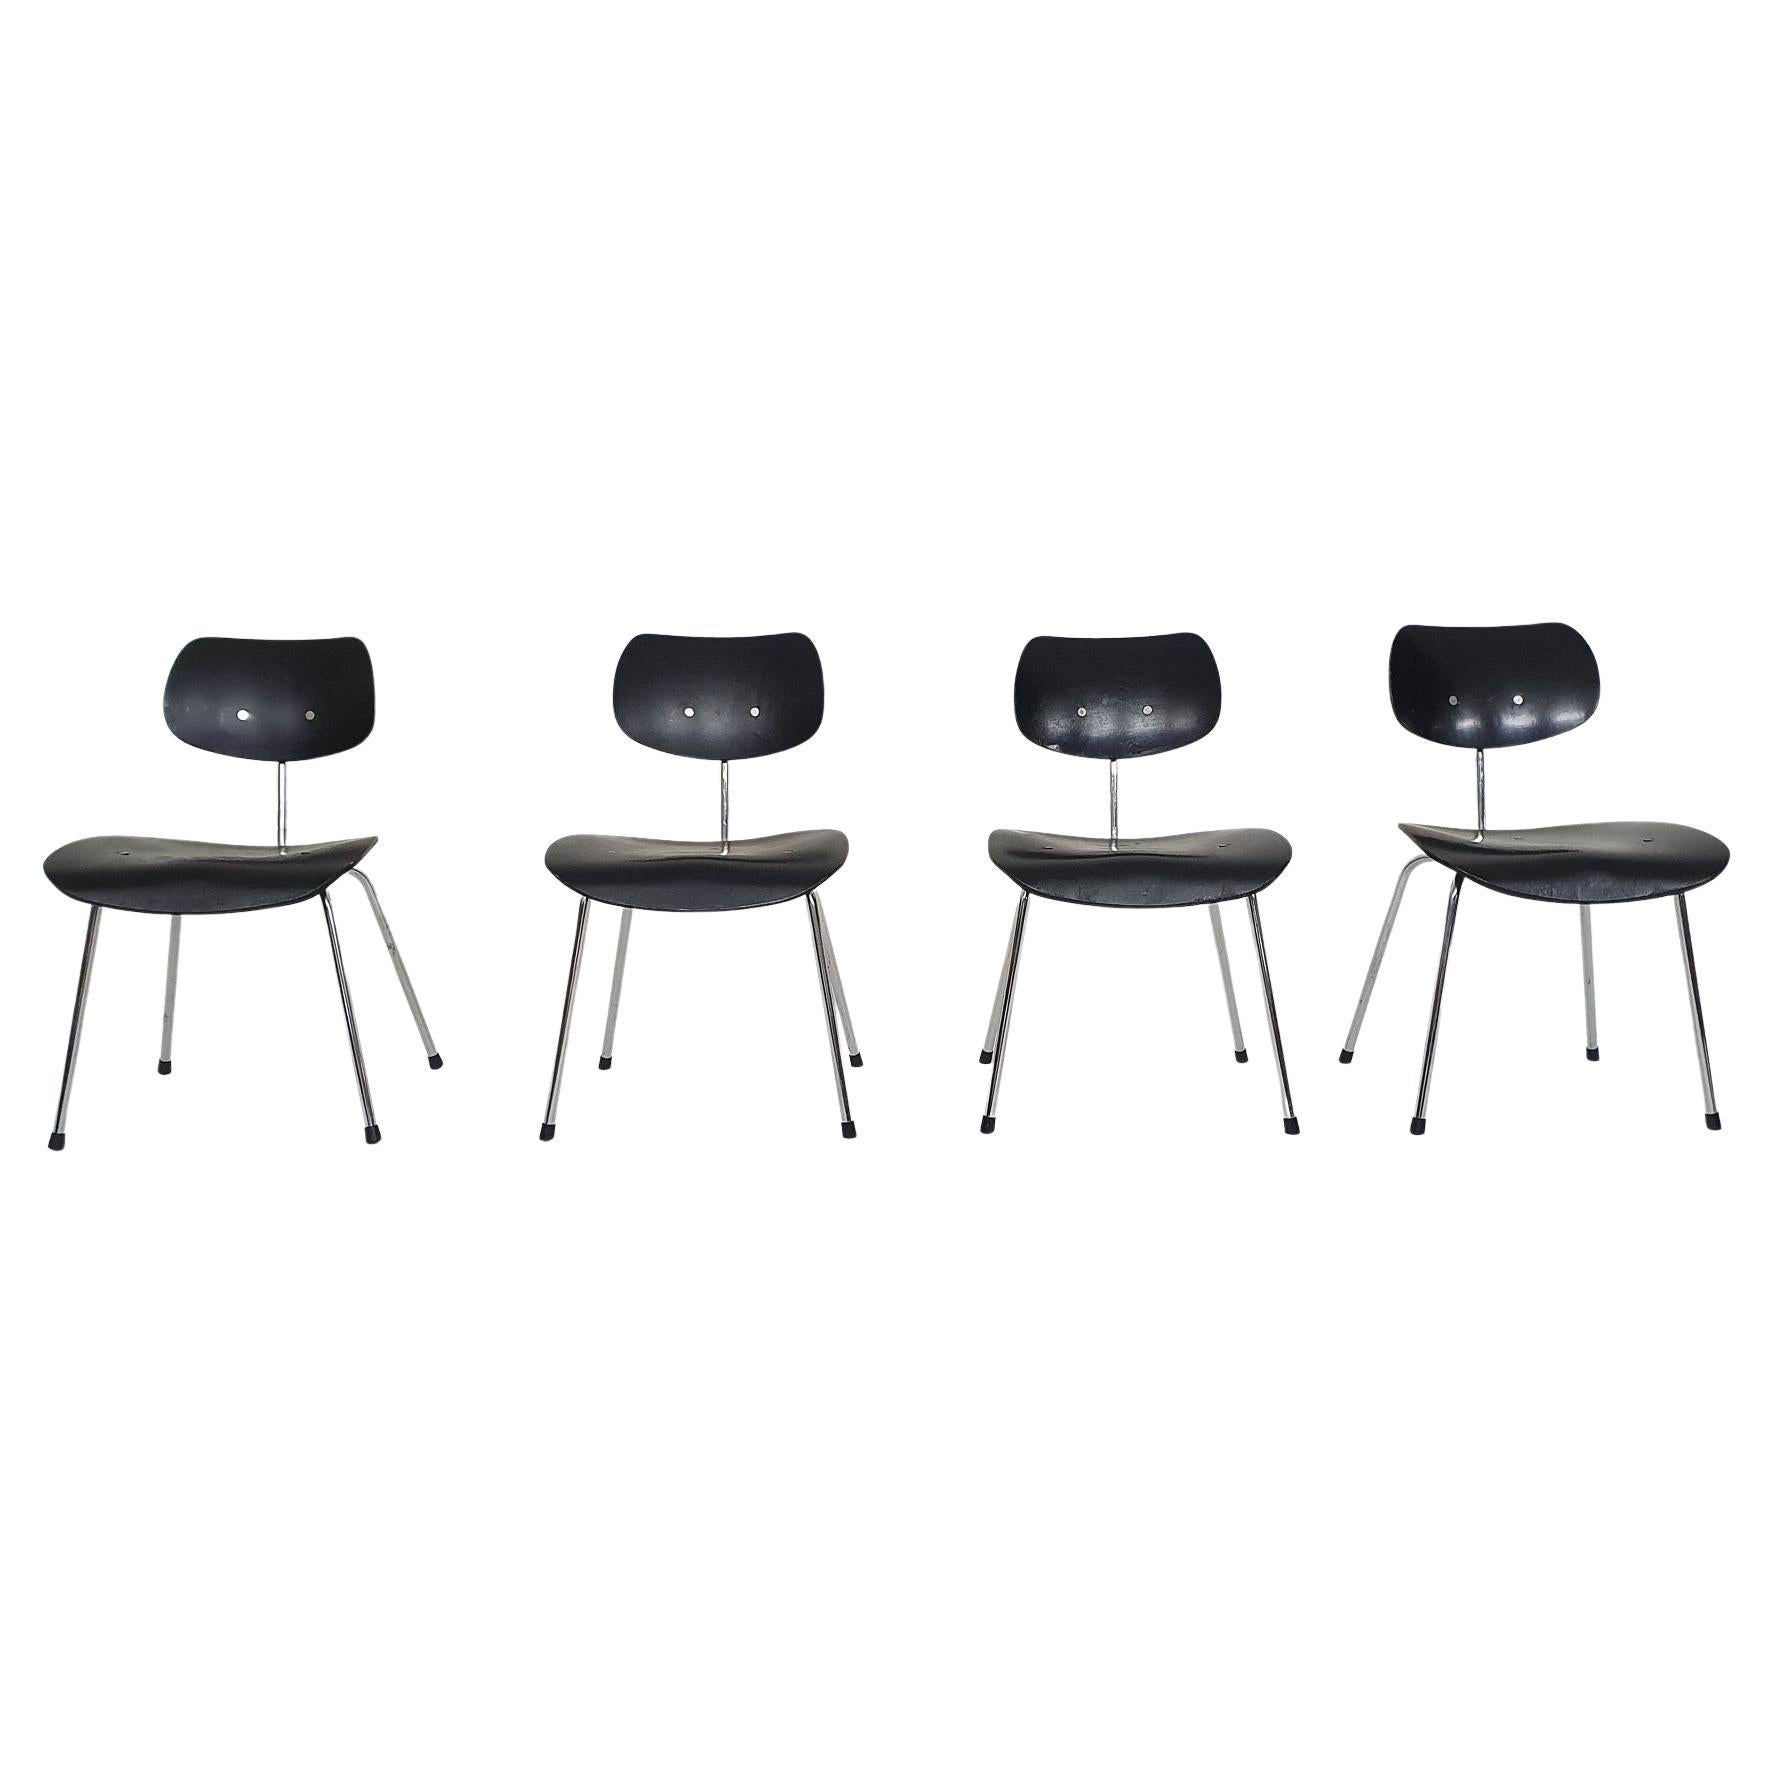 Set of 4 x BLACK Chair Rubber GlidesWilde & SpiethEgon Eiermann 